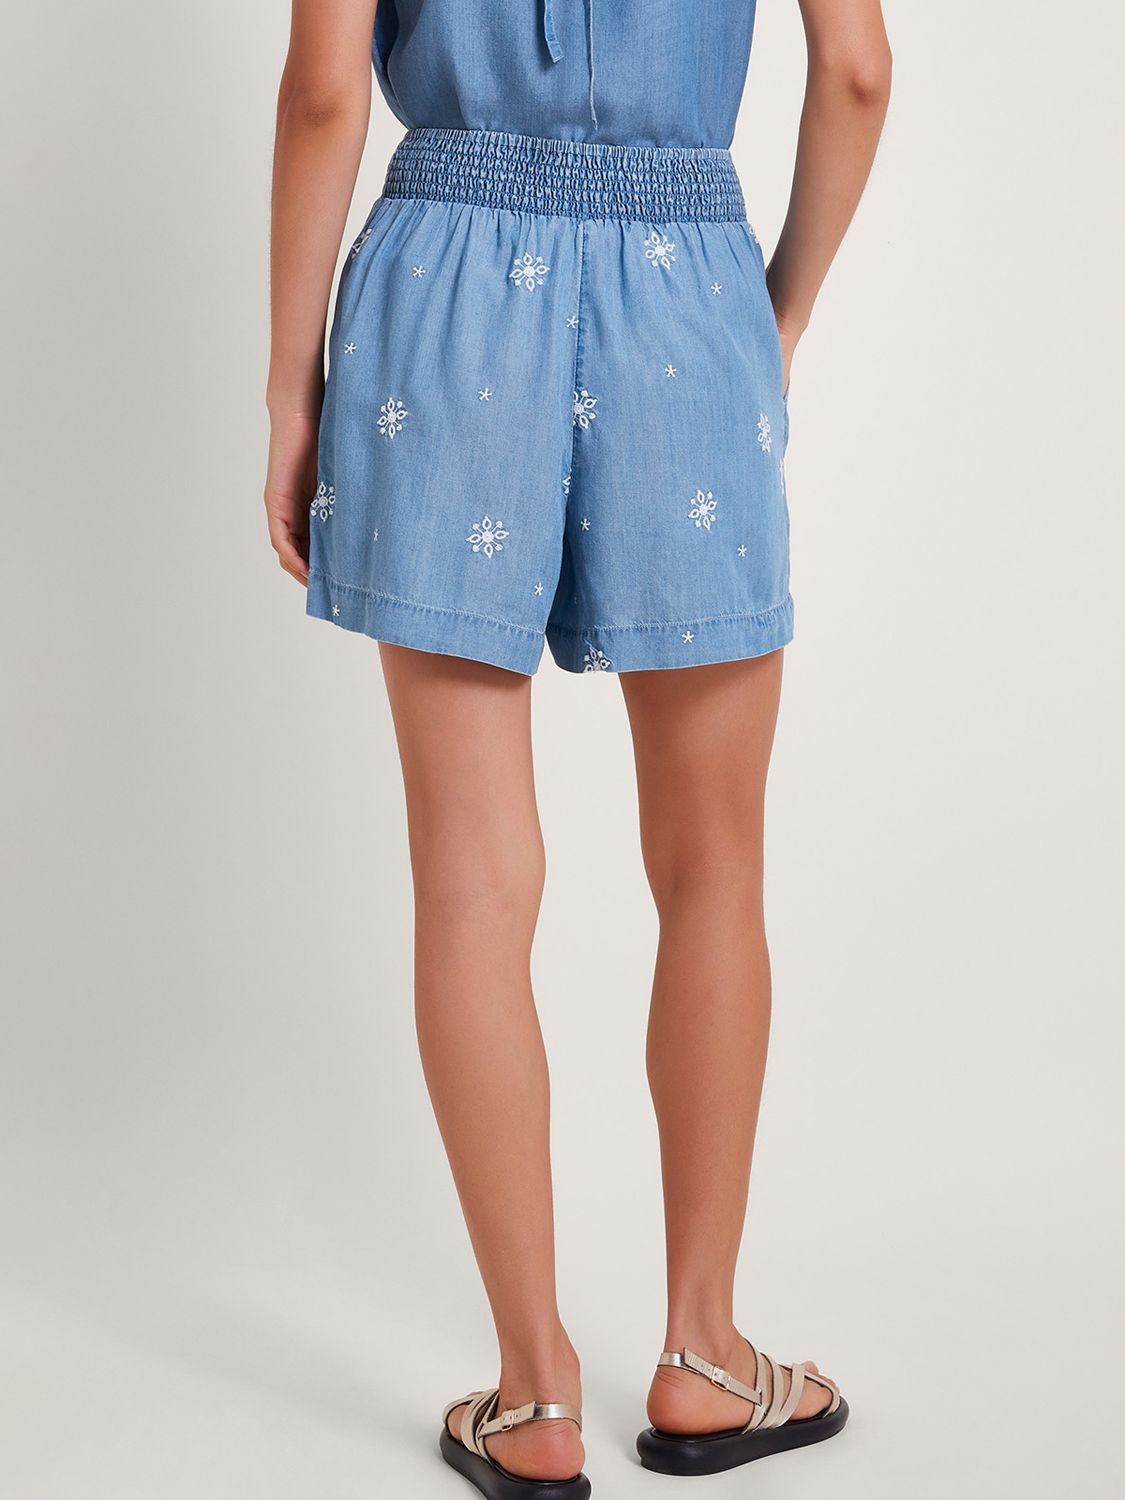 Monsoon Lyrica Embroidered Shorts, Denim Blue, S